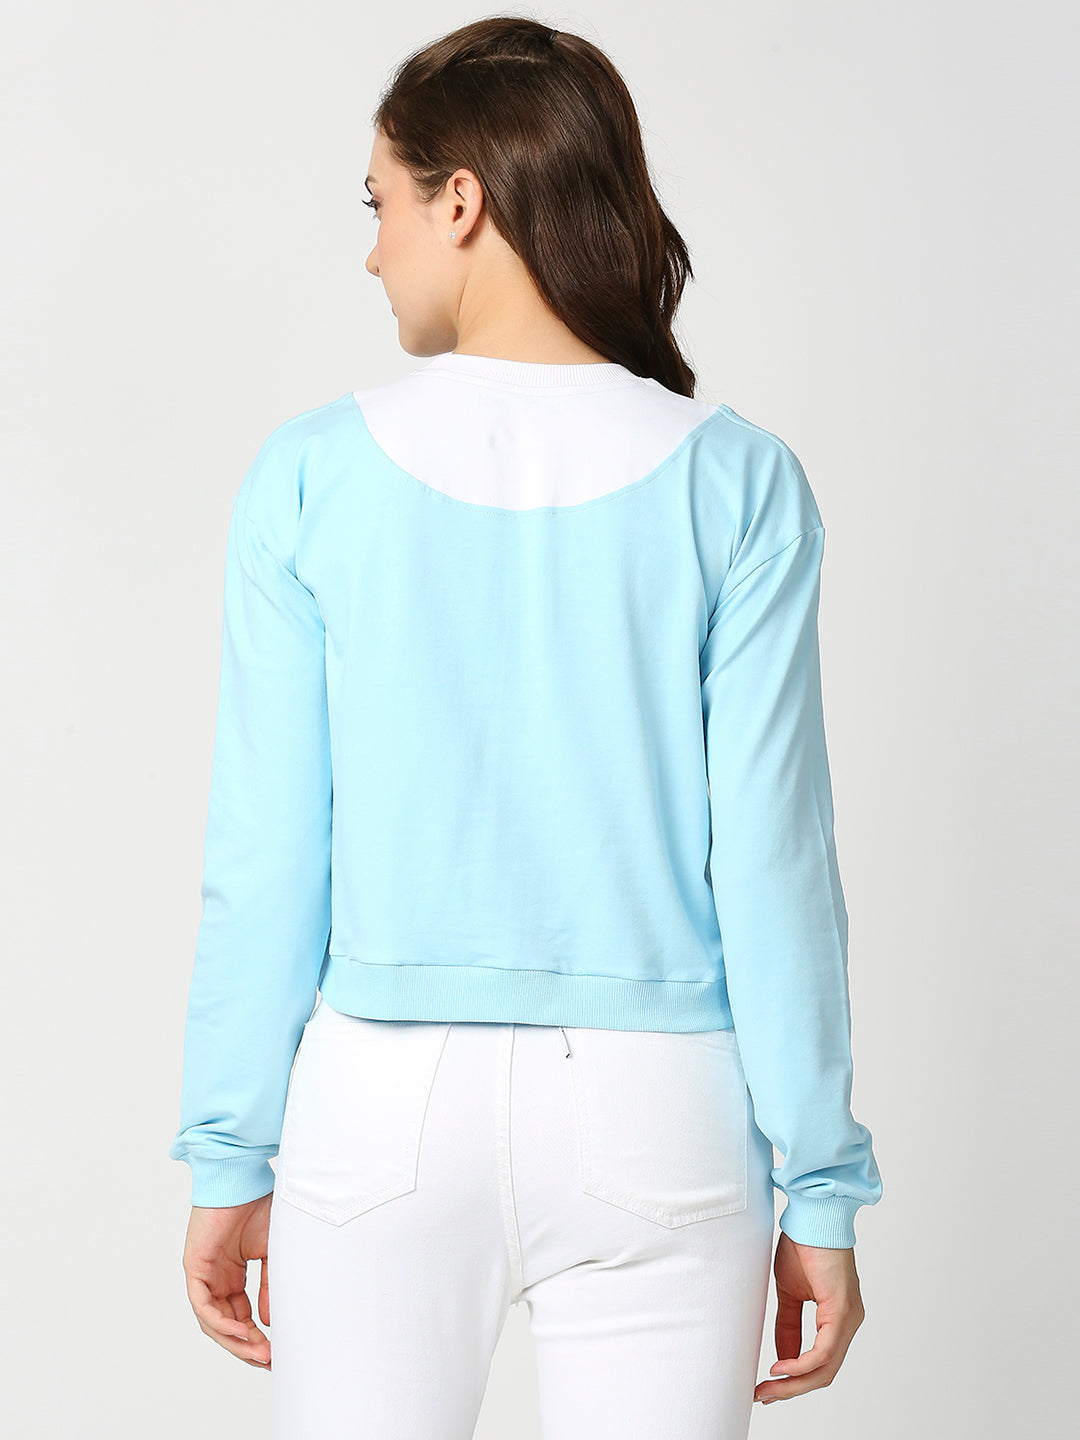 Buy Blamblack Women's Powder Blue & White Color Full Sleeves T-Shirt